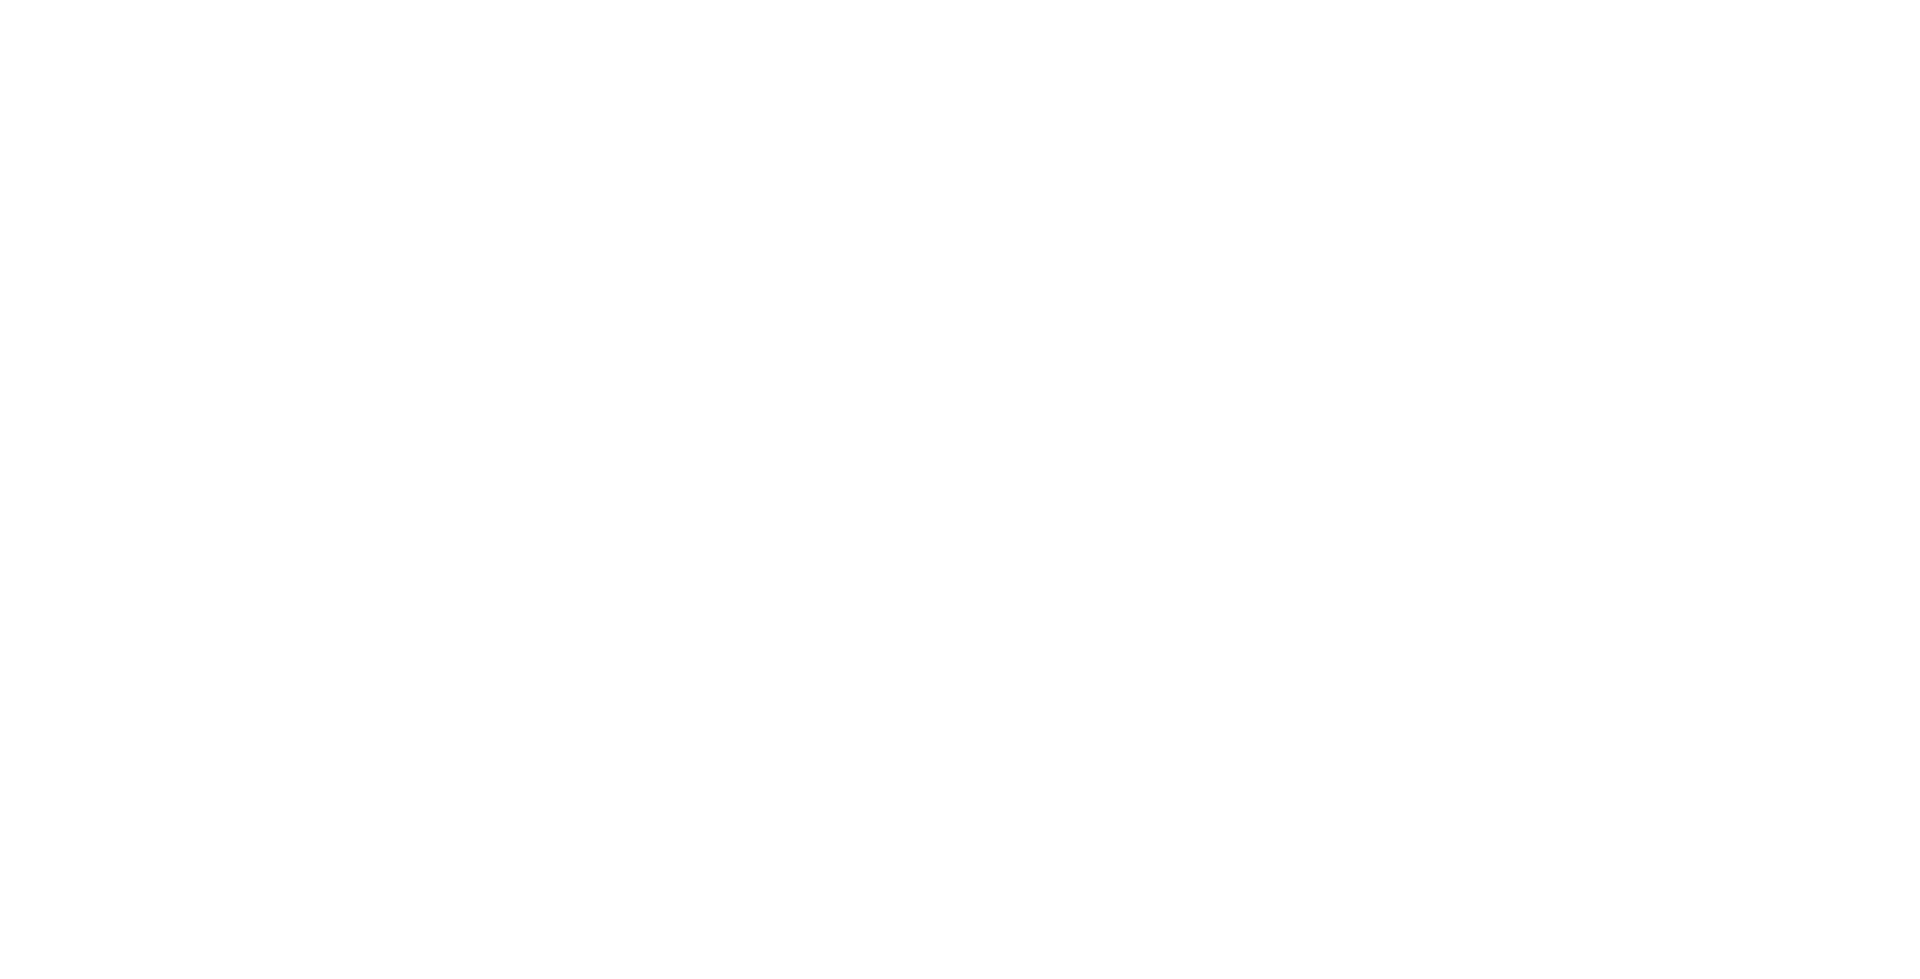 Texas Live!